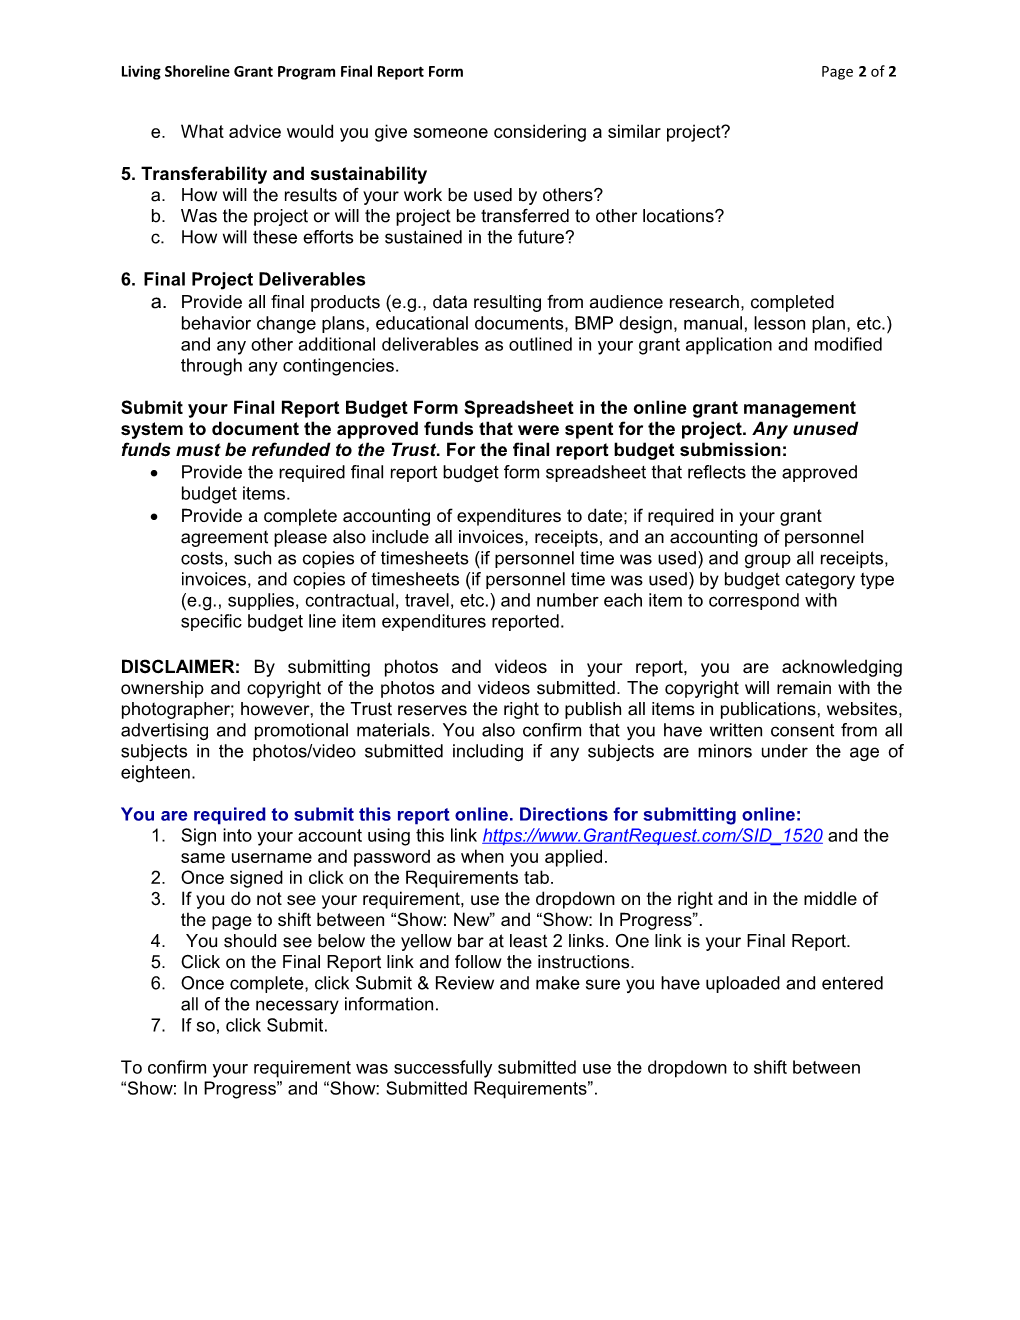 Living Shoreline Grant Program Final Report Form Page 1 of 2